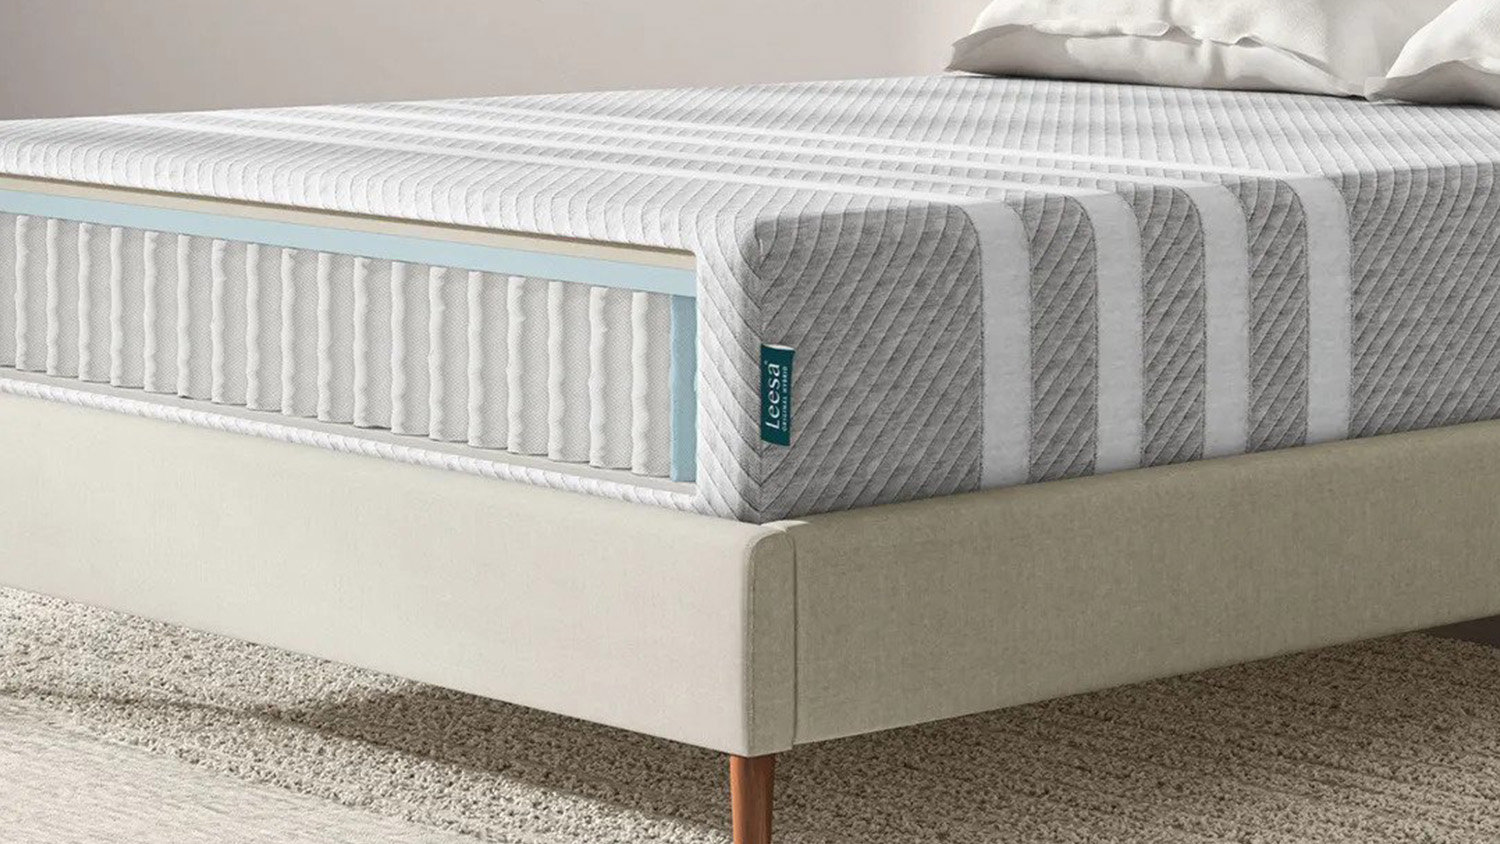 Image shows one corner of the Leesa Original Hybrid Mattress sat on a cream fabric bed frame